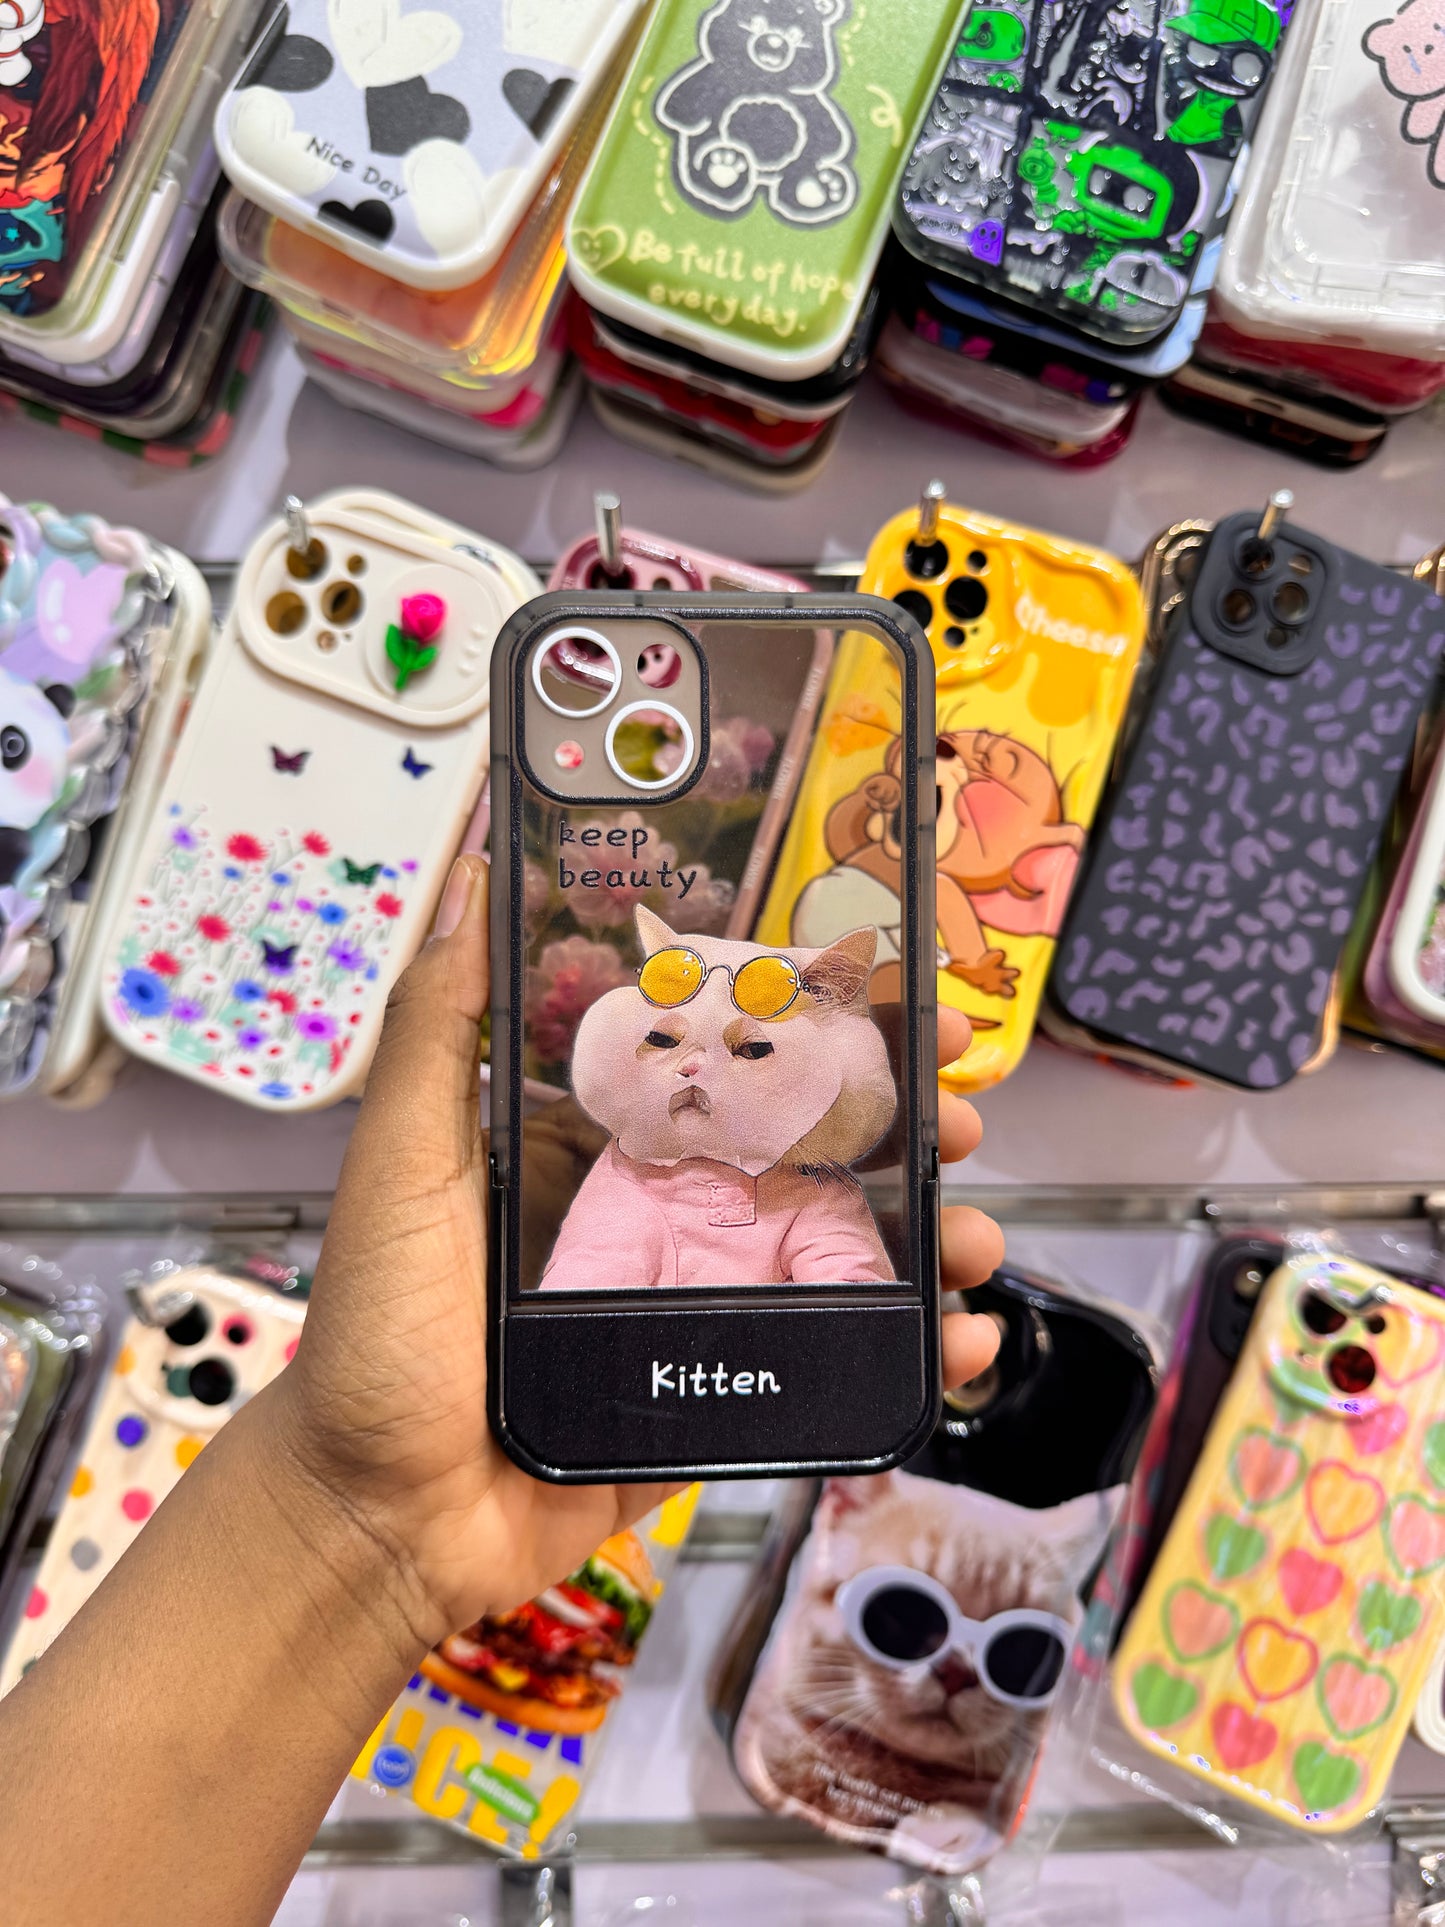 Keep Beauty Kitten Case For IPhones